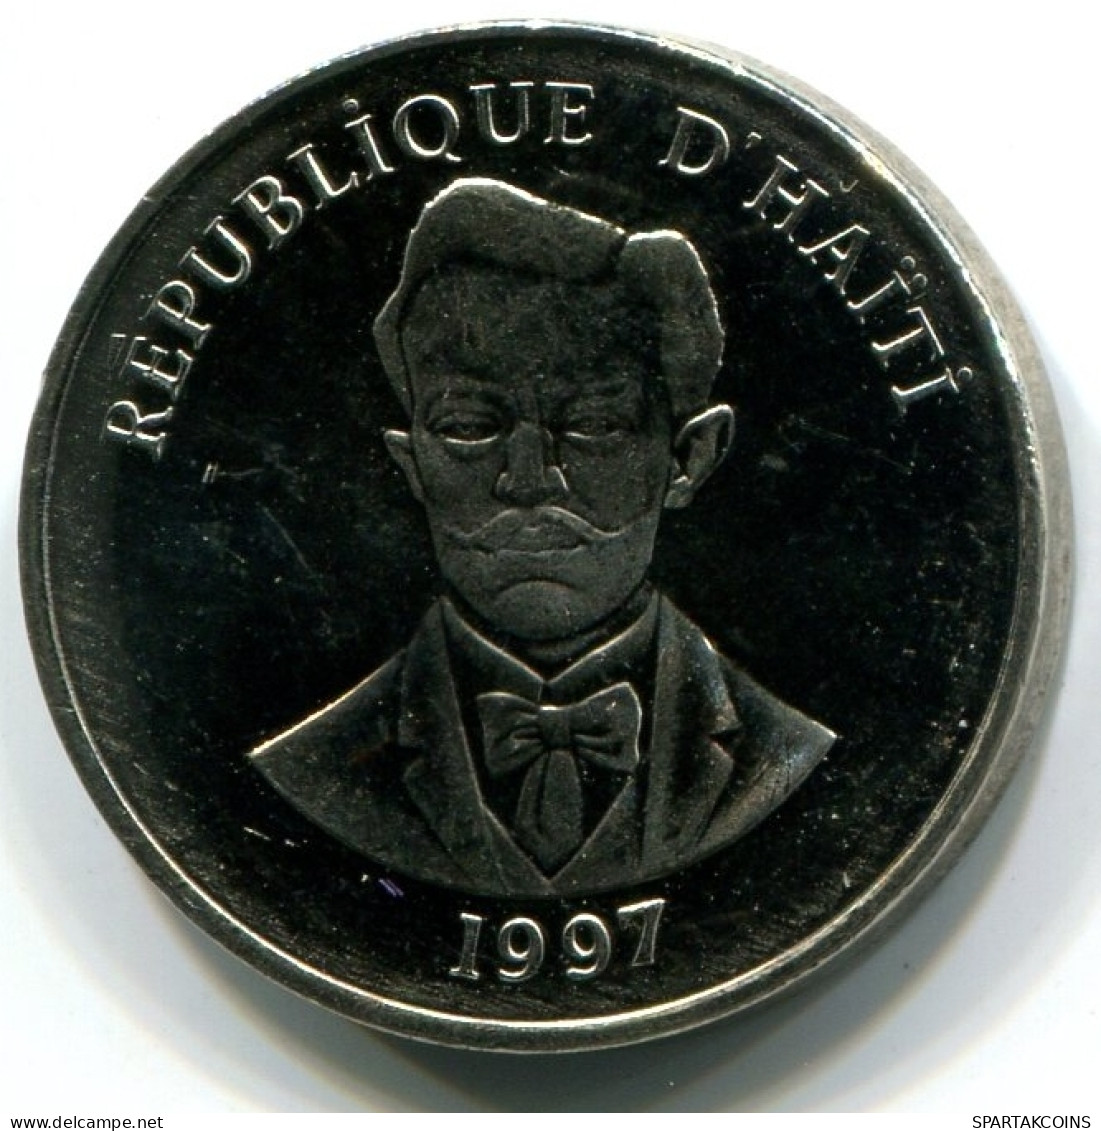 5 CENTIMES 1997 HAITI UNC Coin #W11389.U - Haití